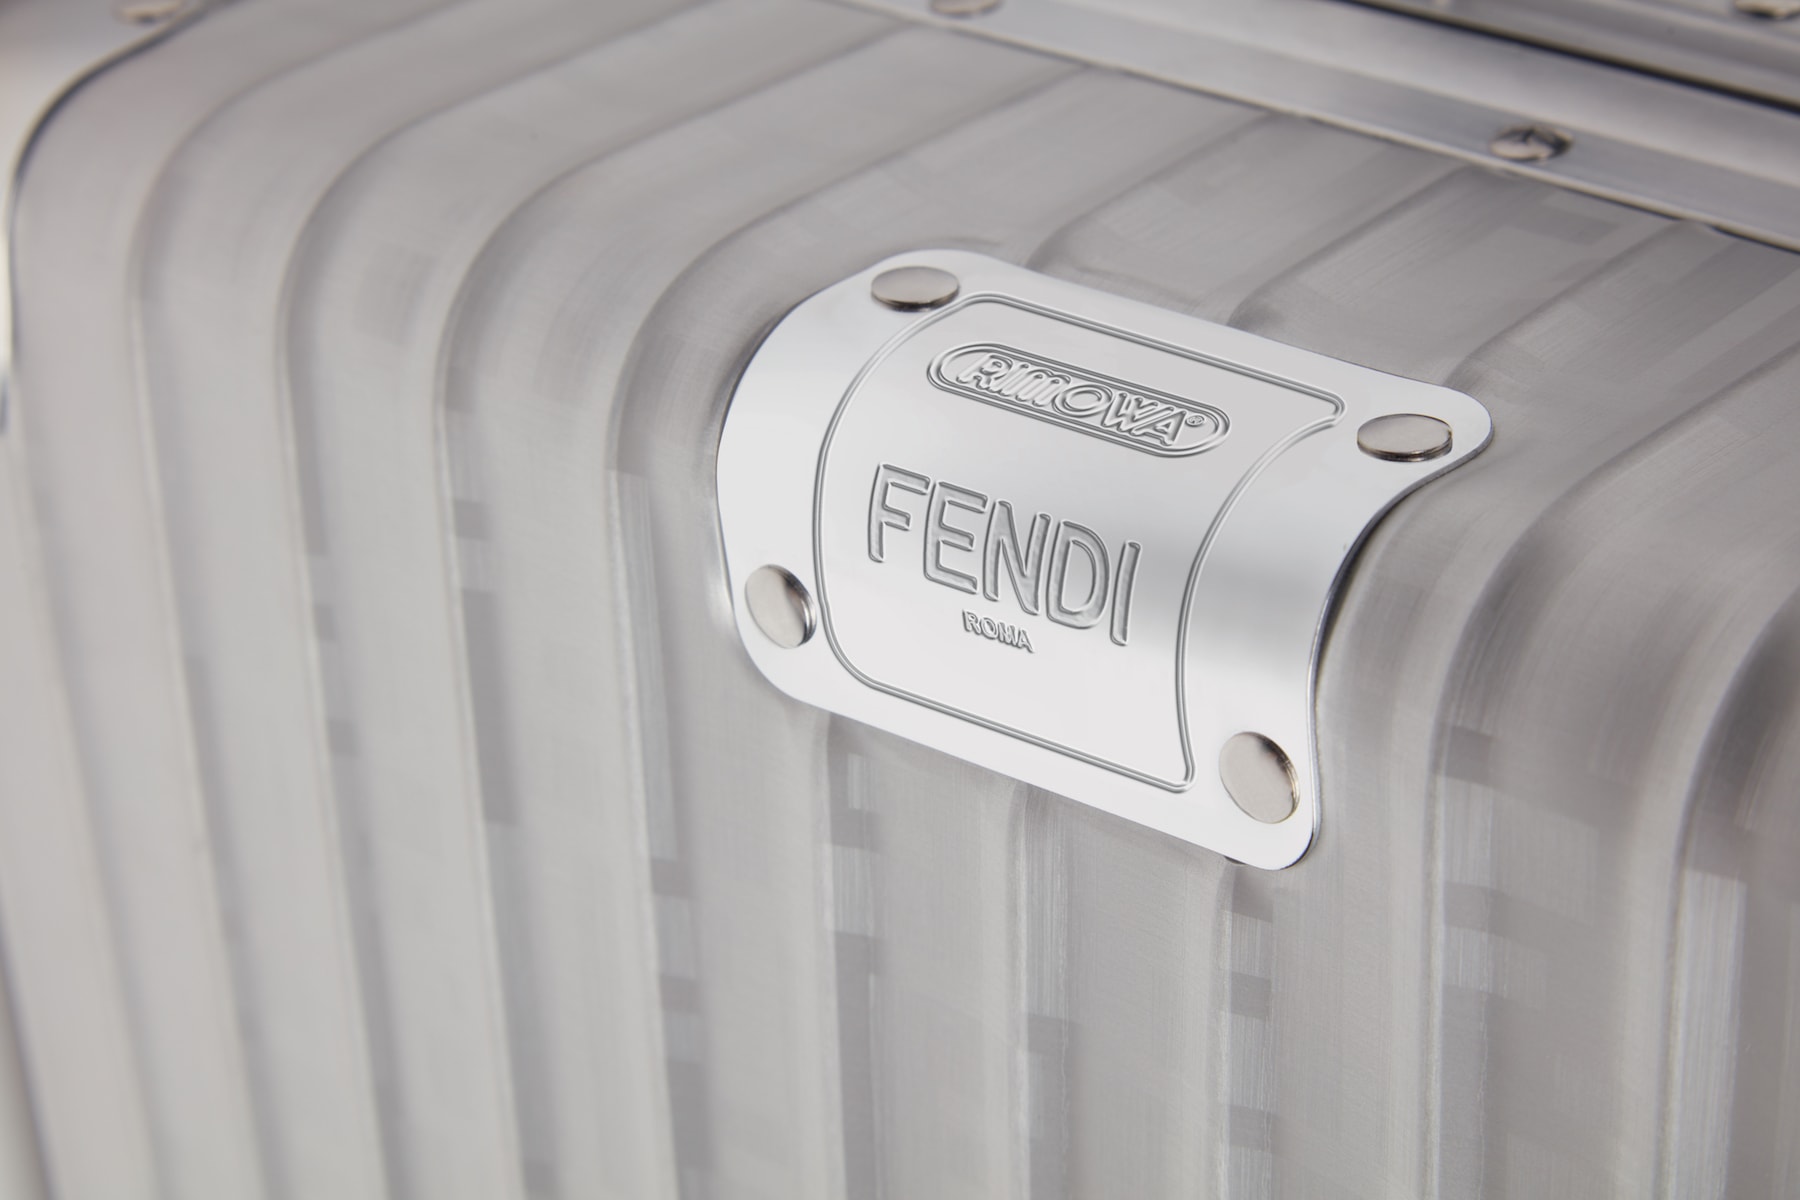 FENDI x RIMOWA 全新聯乘行李箱即將上架